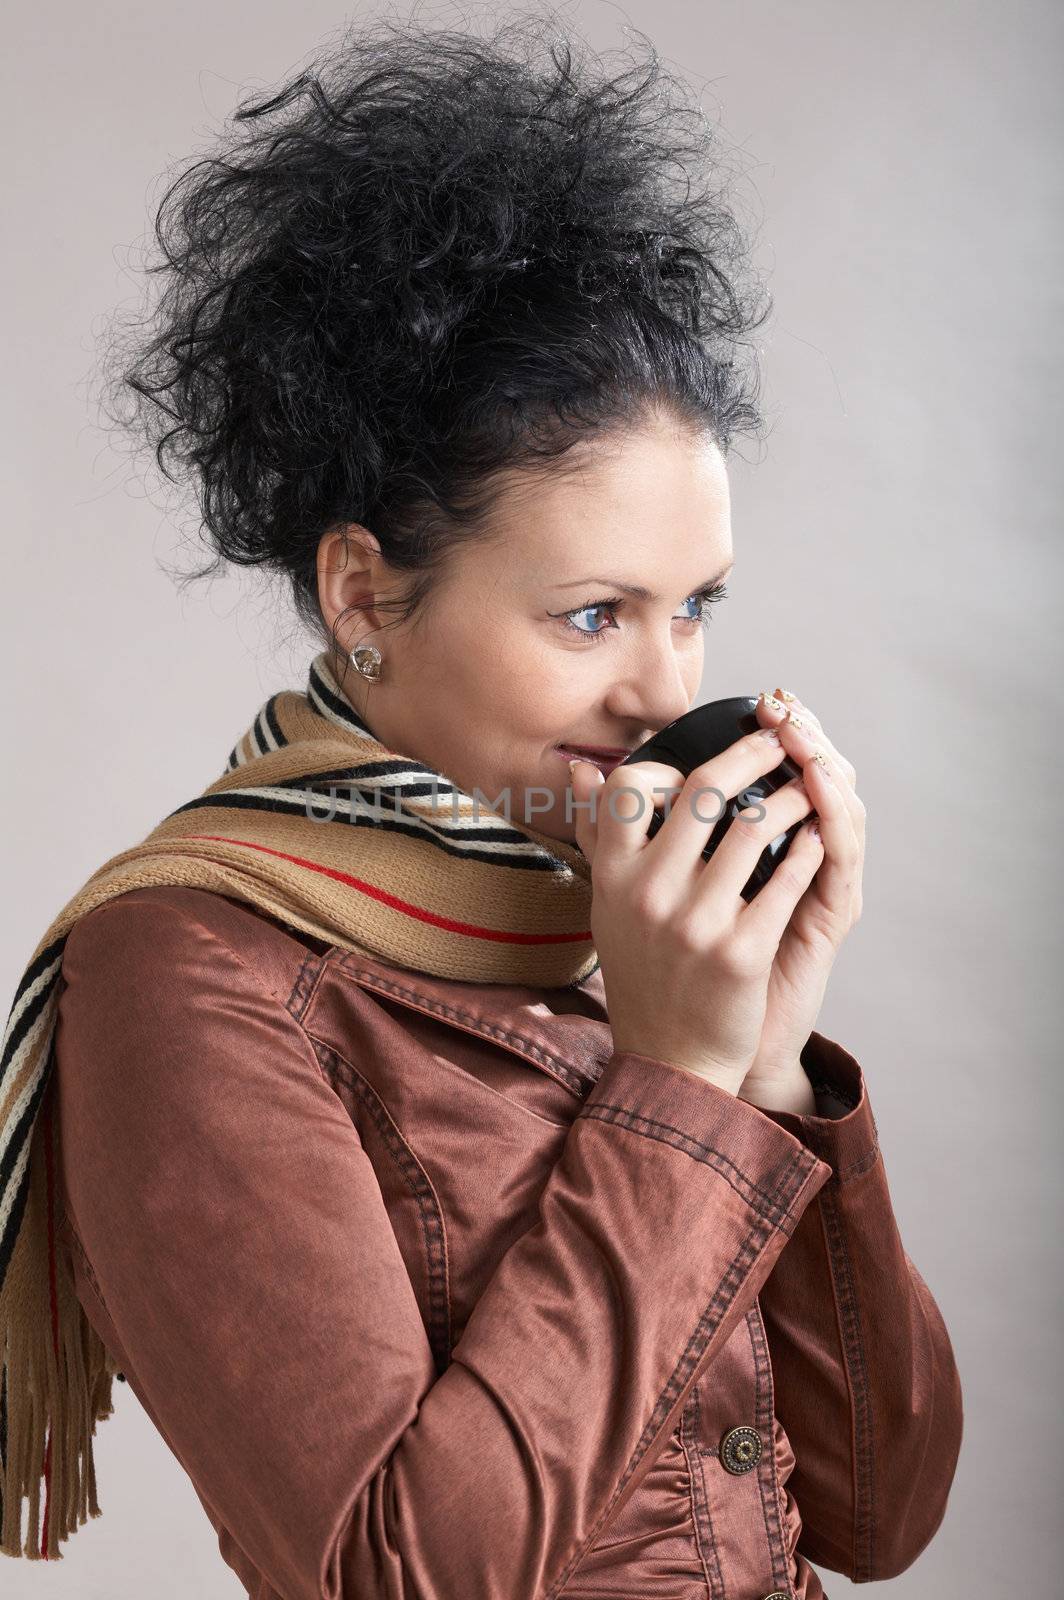 Drinking hot coffee by velkol